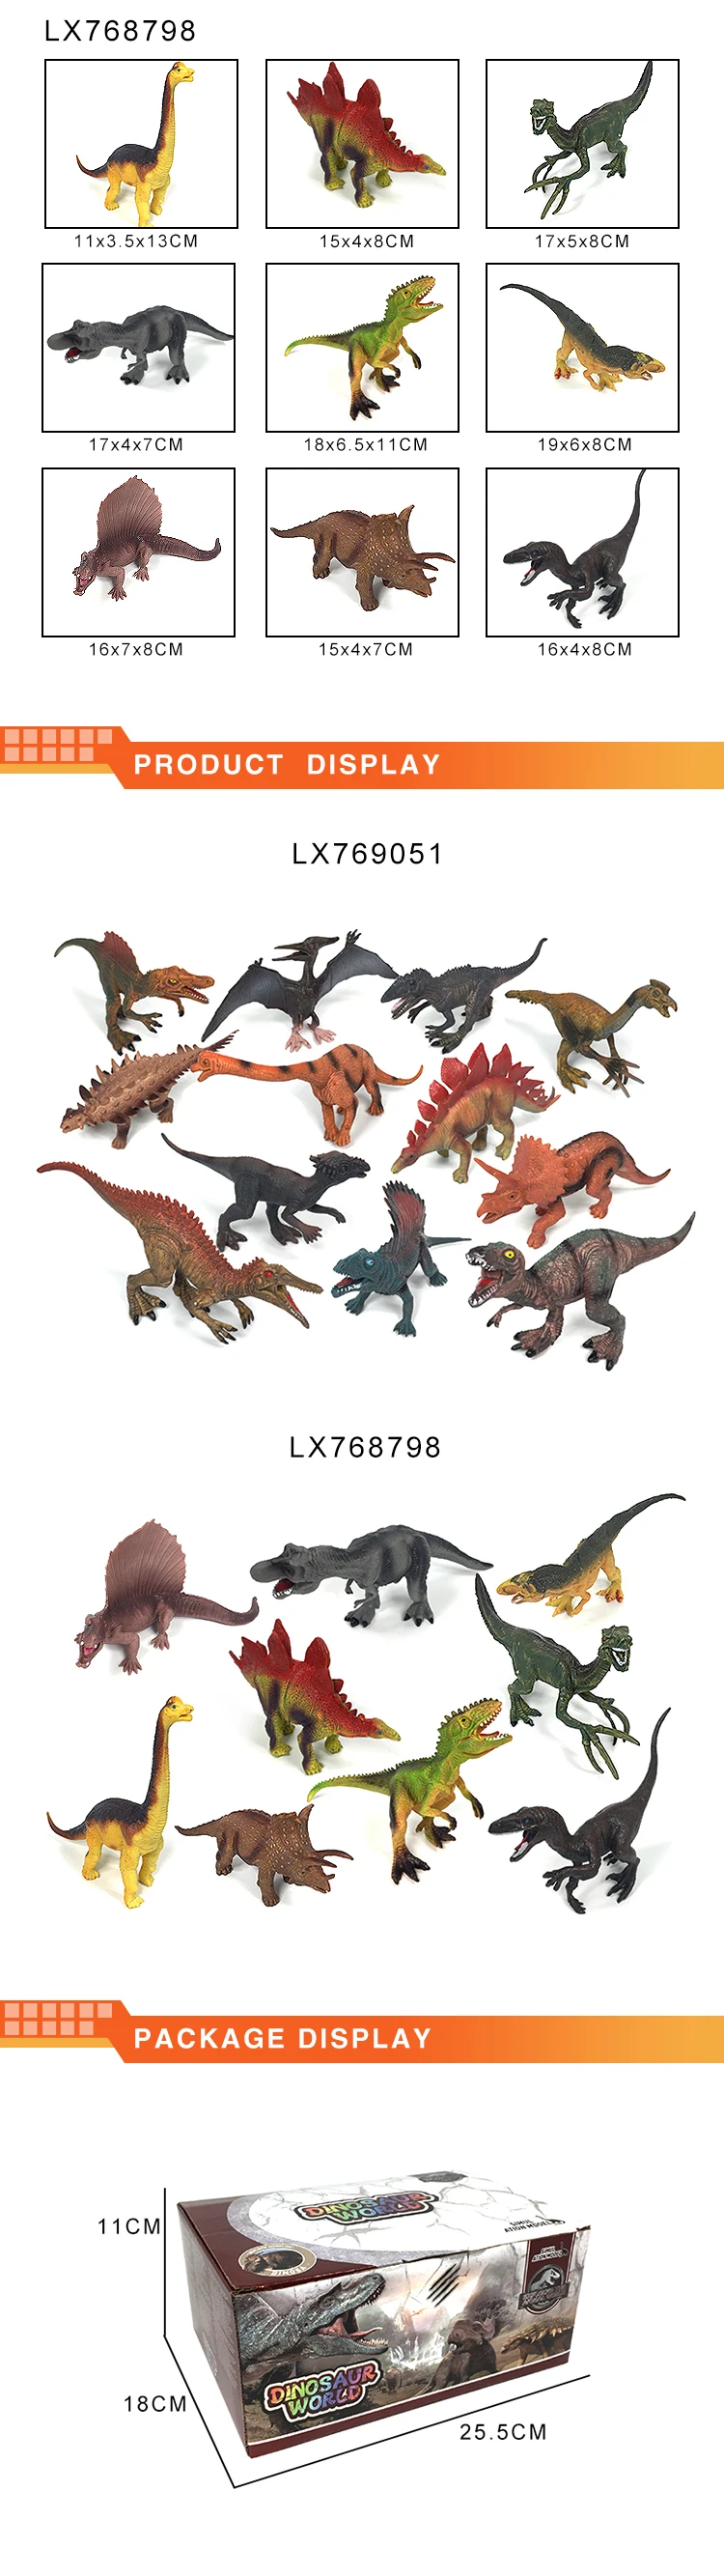 New arrival 12 models simulation small dinosaur early education science dinosaur toys